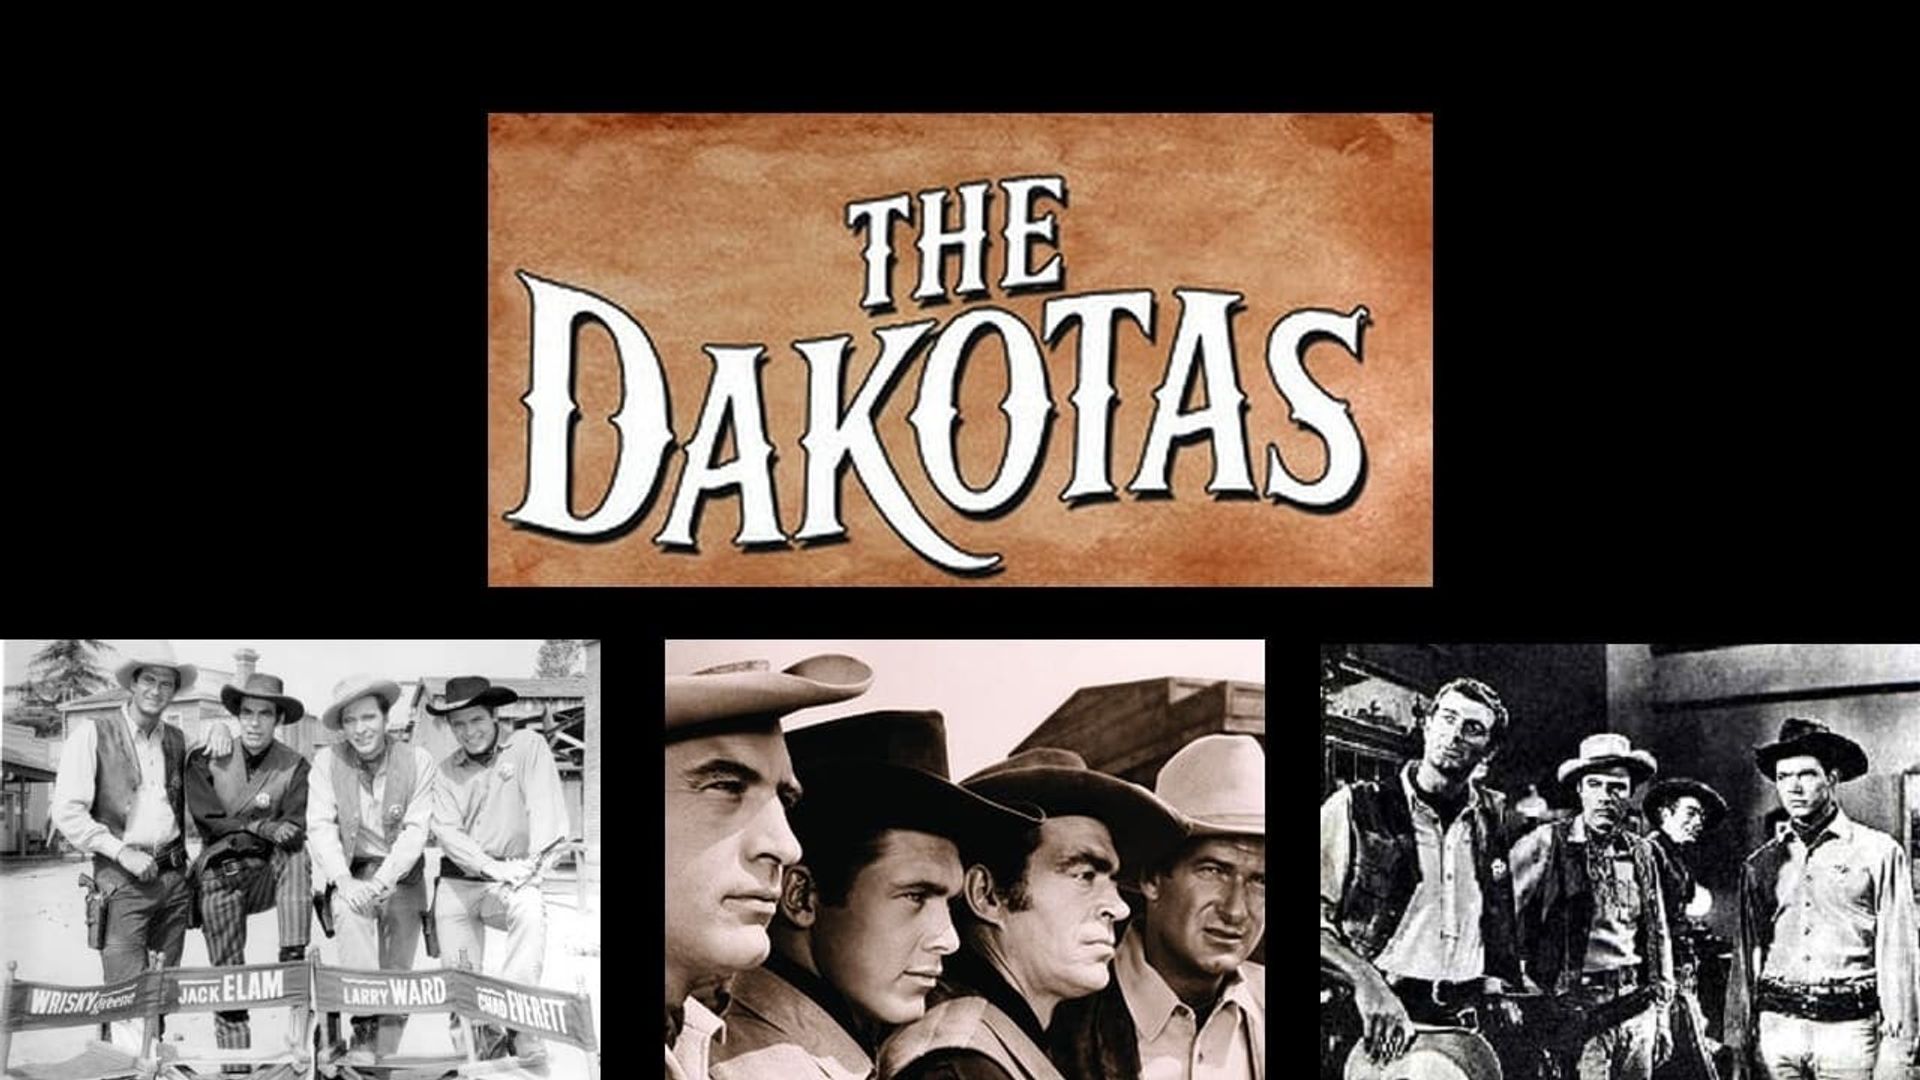 The Dakotas background